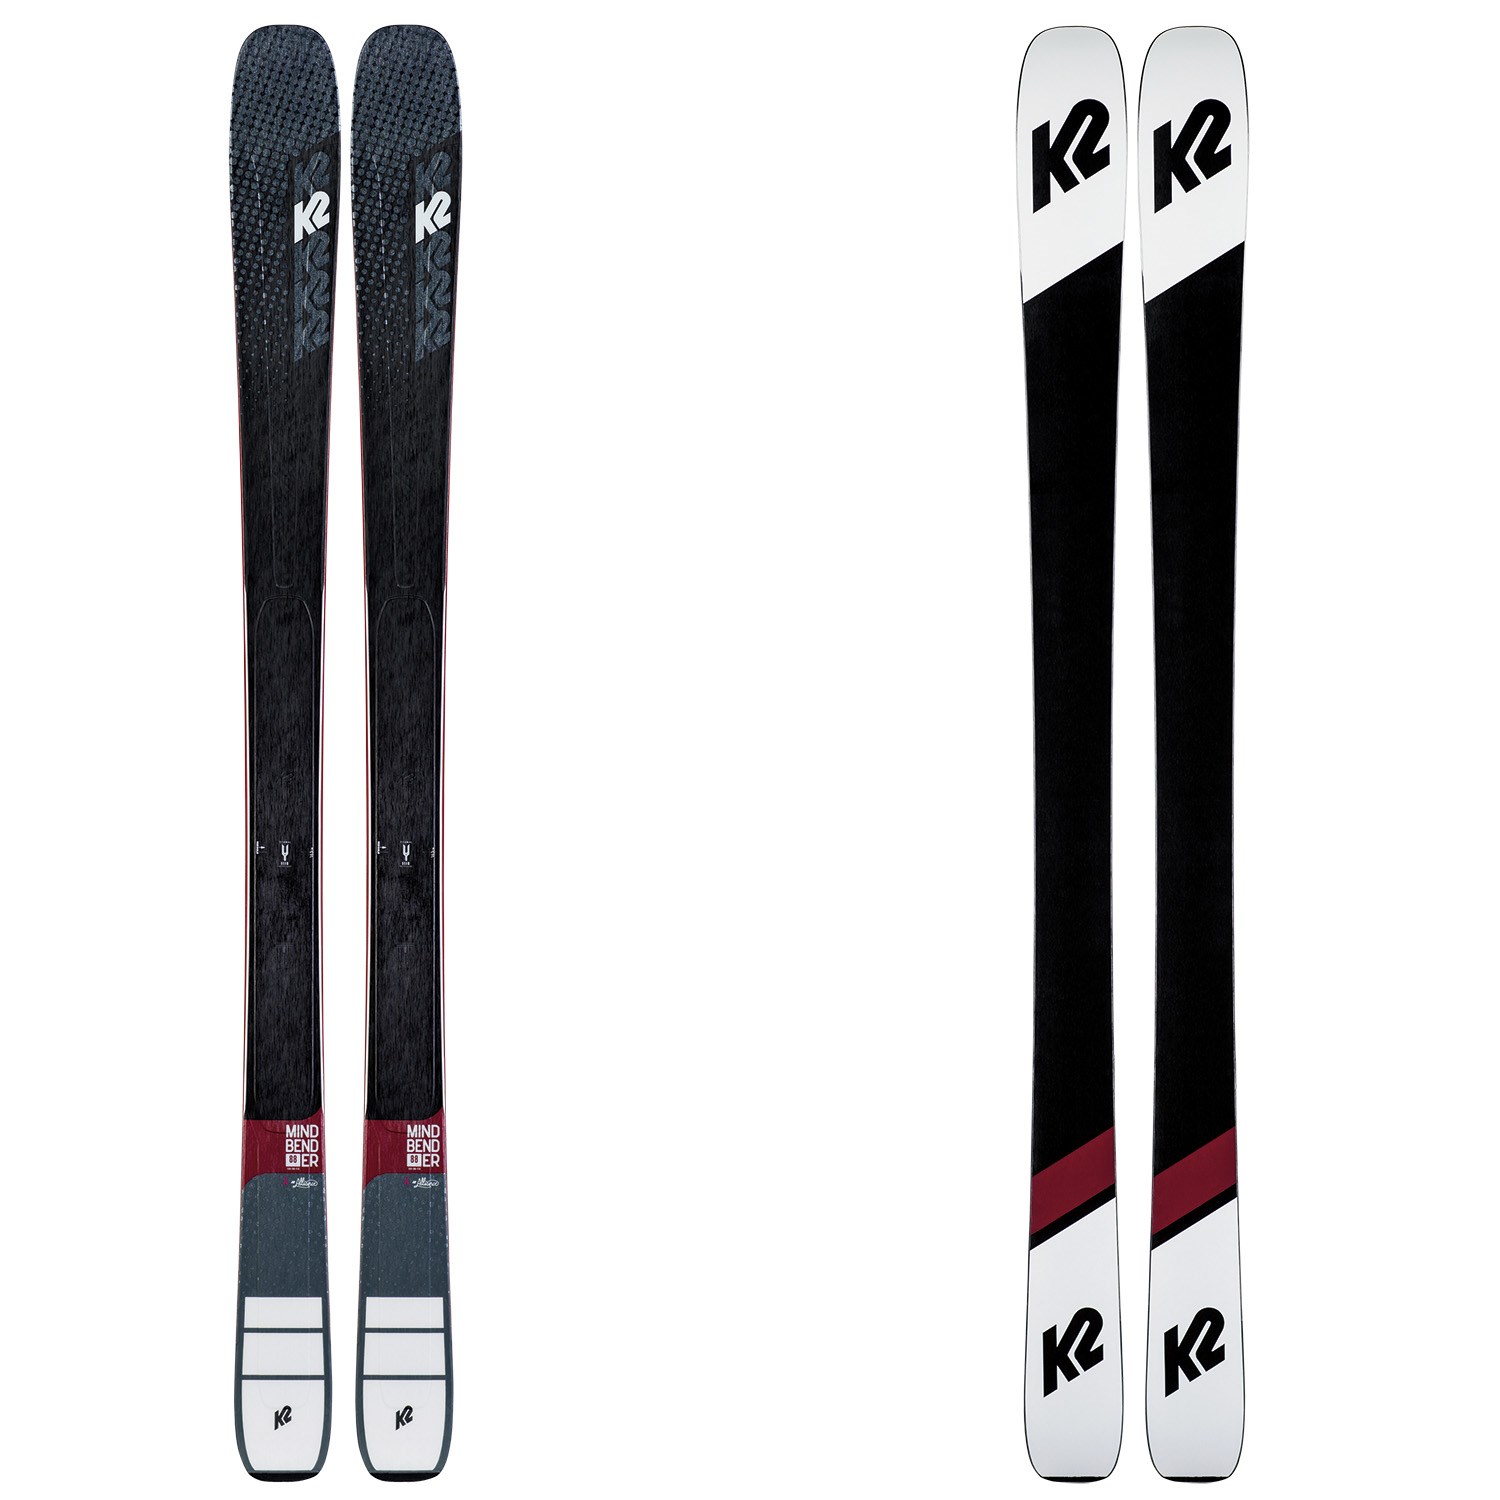 K2 Mindbender 88 Ti Alliance Skis - Women's 2020 | evo